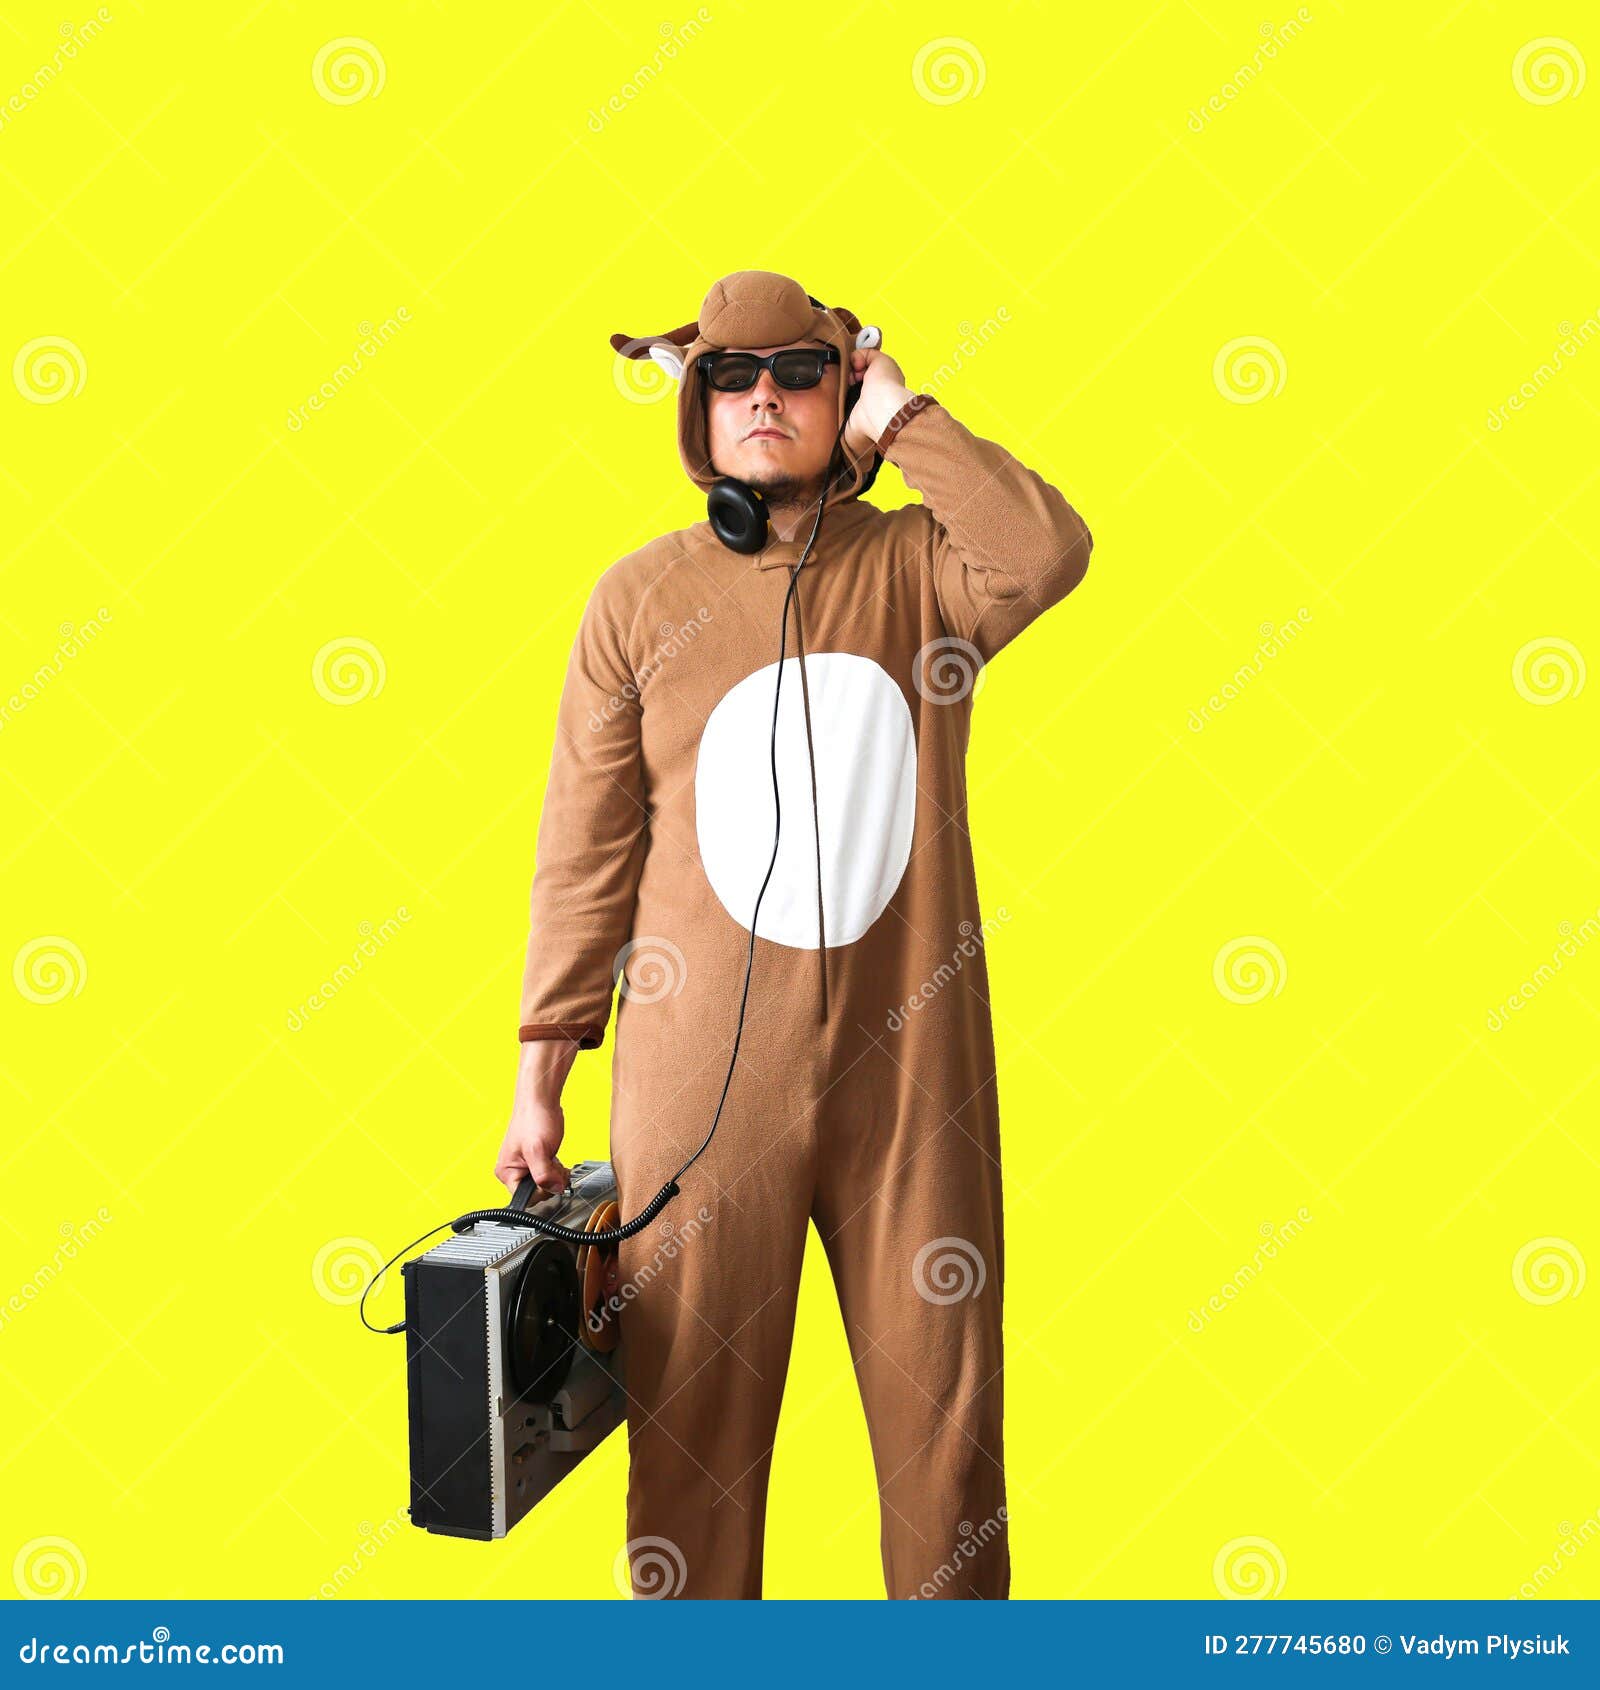 https://thumbs.dreamstime.com/z/man-cosplay-costume-cow-reel-tape-recorder-guy-animal-pyjamas-sleepwear-funny-photo-party-ideas-disco-retro-music-277745680.jpg